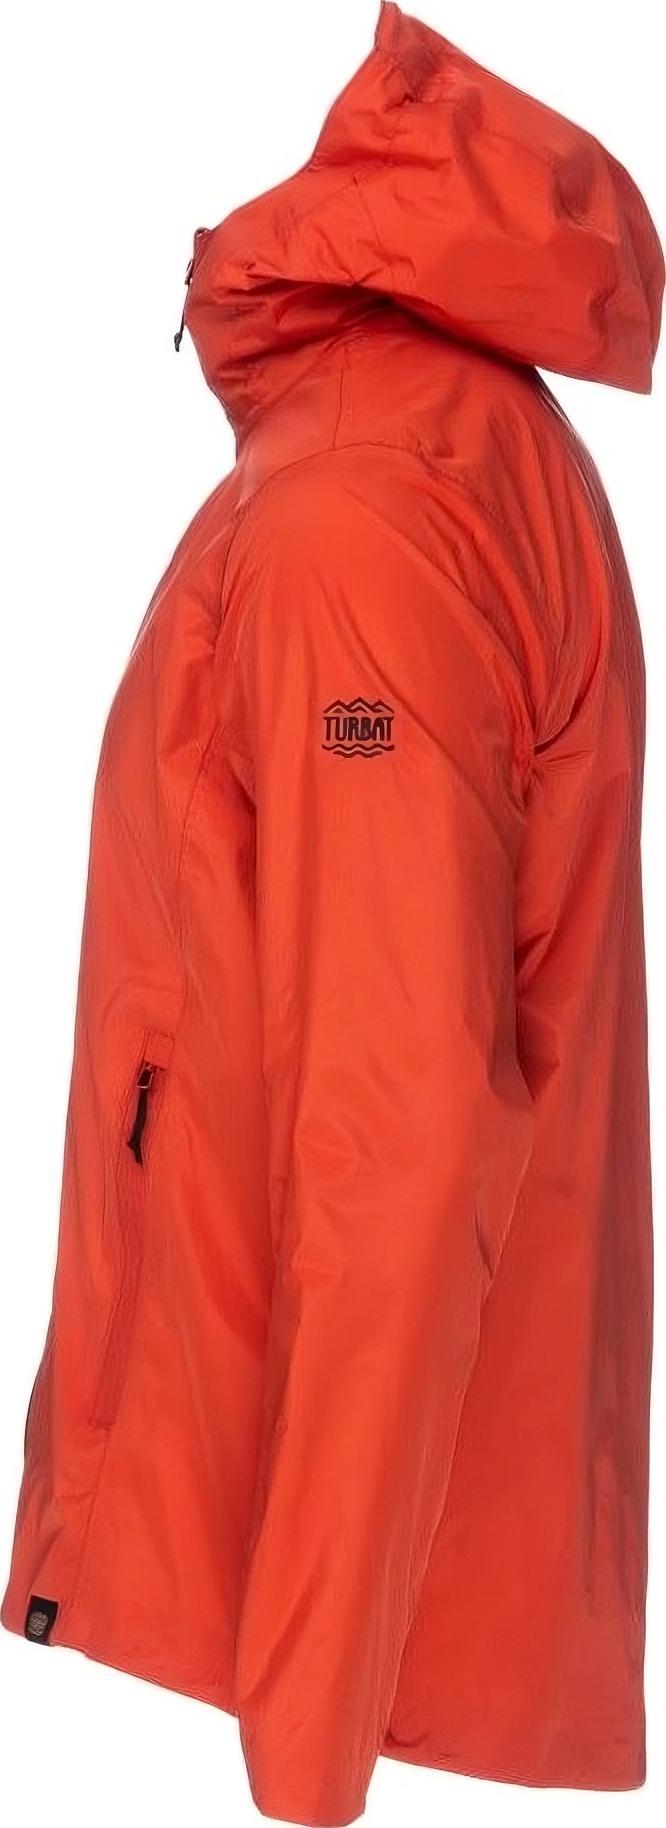 Куртка мужская Turbat Isla Mns orange red XXXL красный фото 2